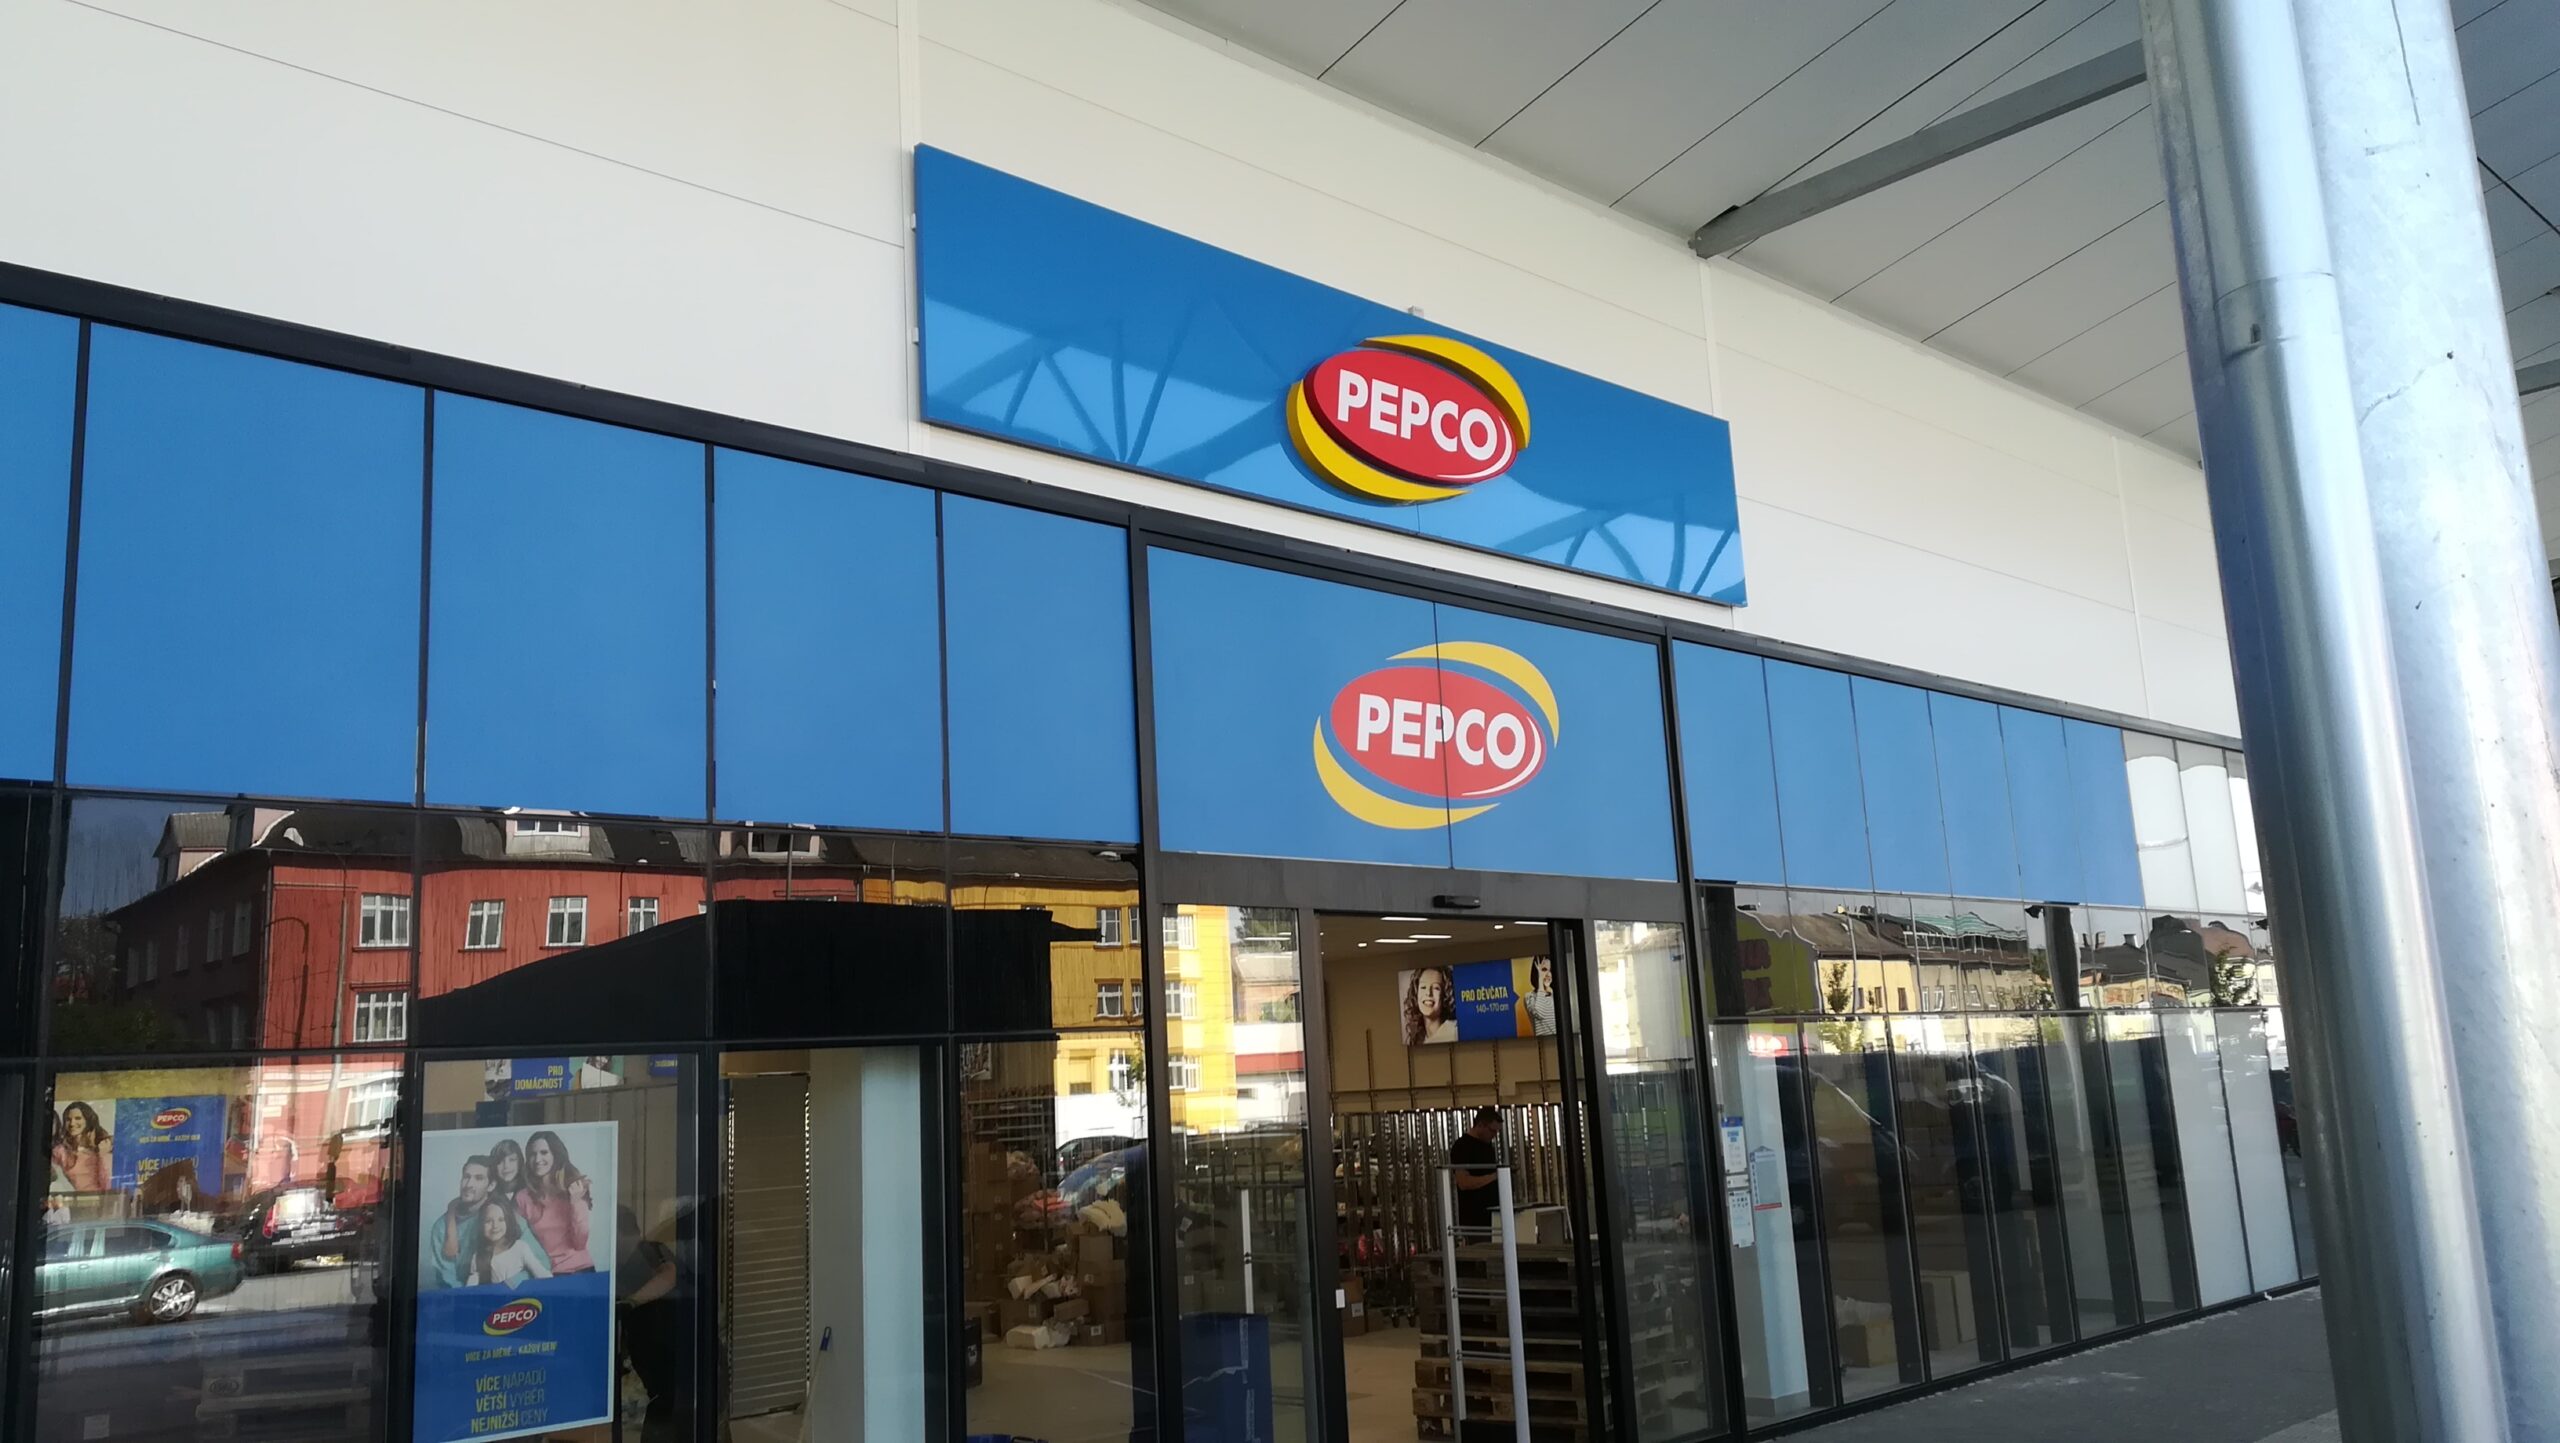 advertising on plexiglass panels - PEPCO shop